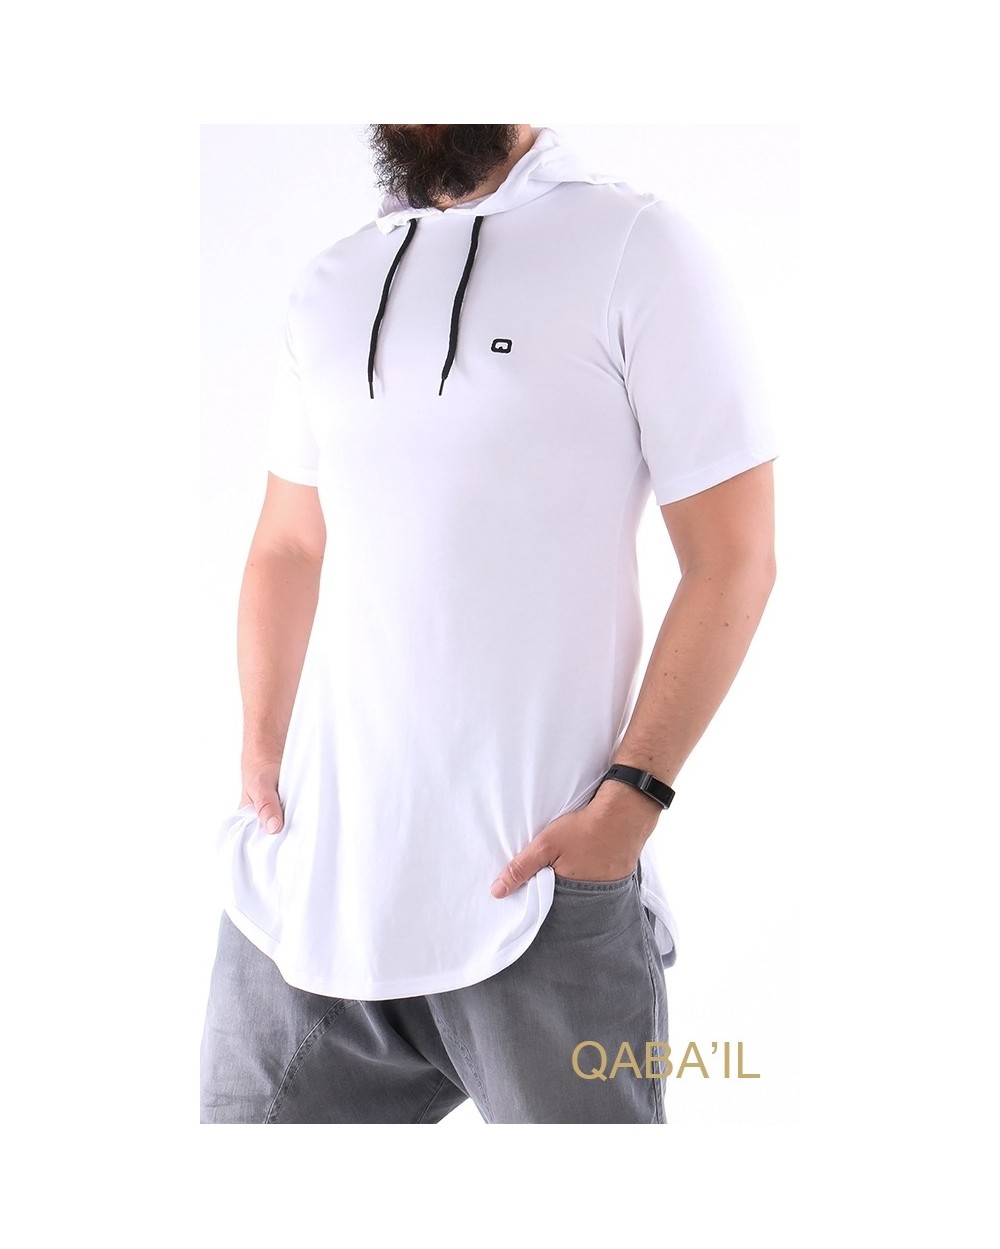 Qaba'il plain short-sleeved hooded t-shirt